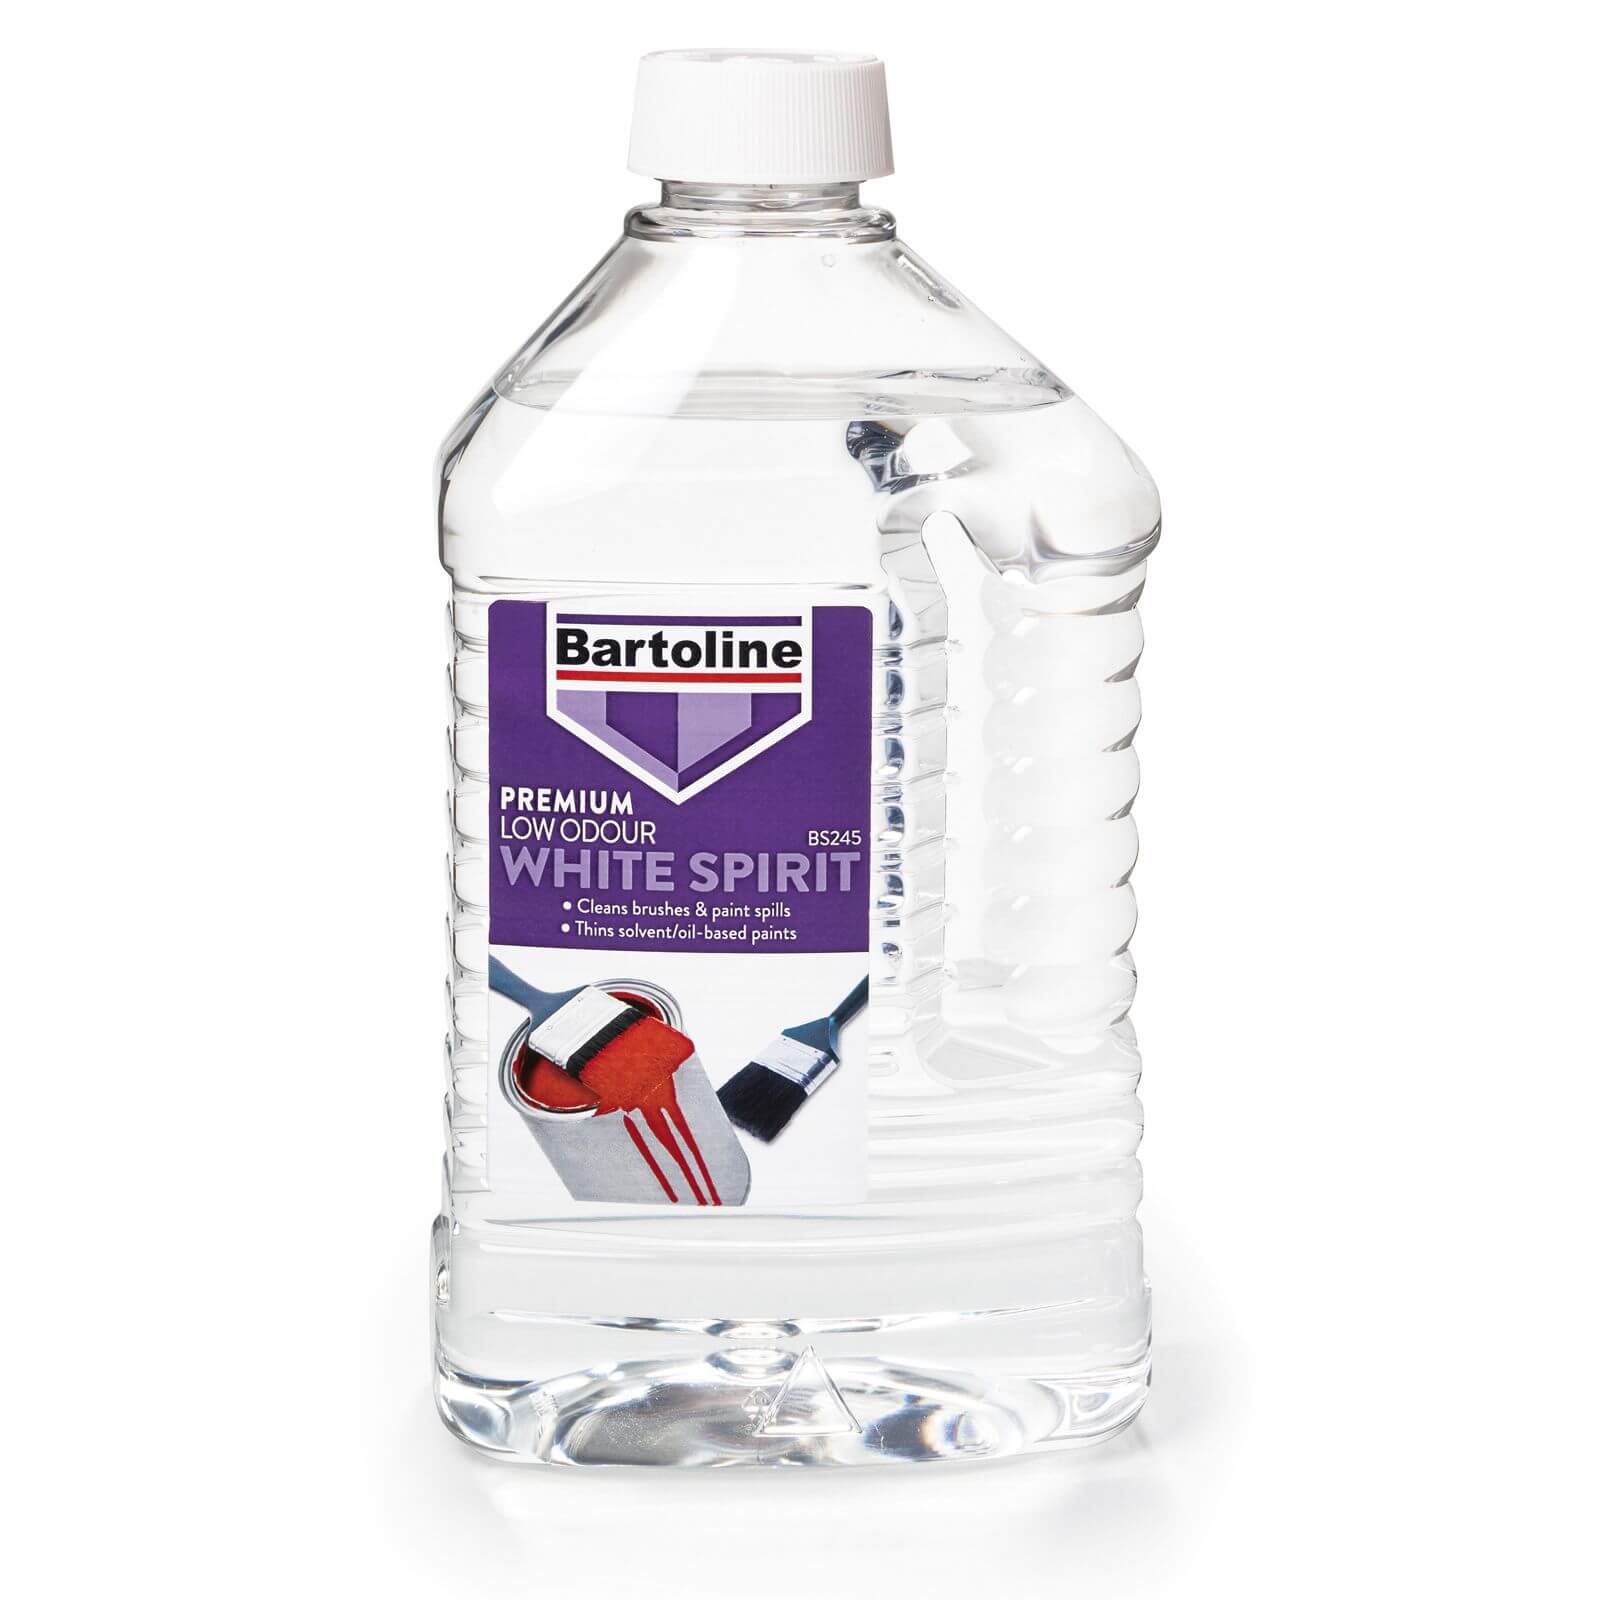 Photo of Bartoline Premium Low Odour White Spirit - 2l